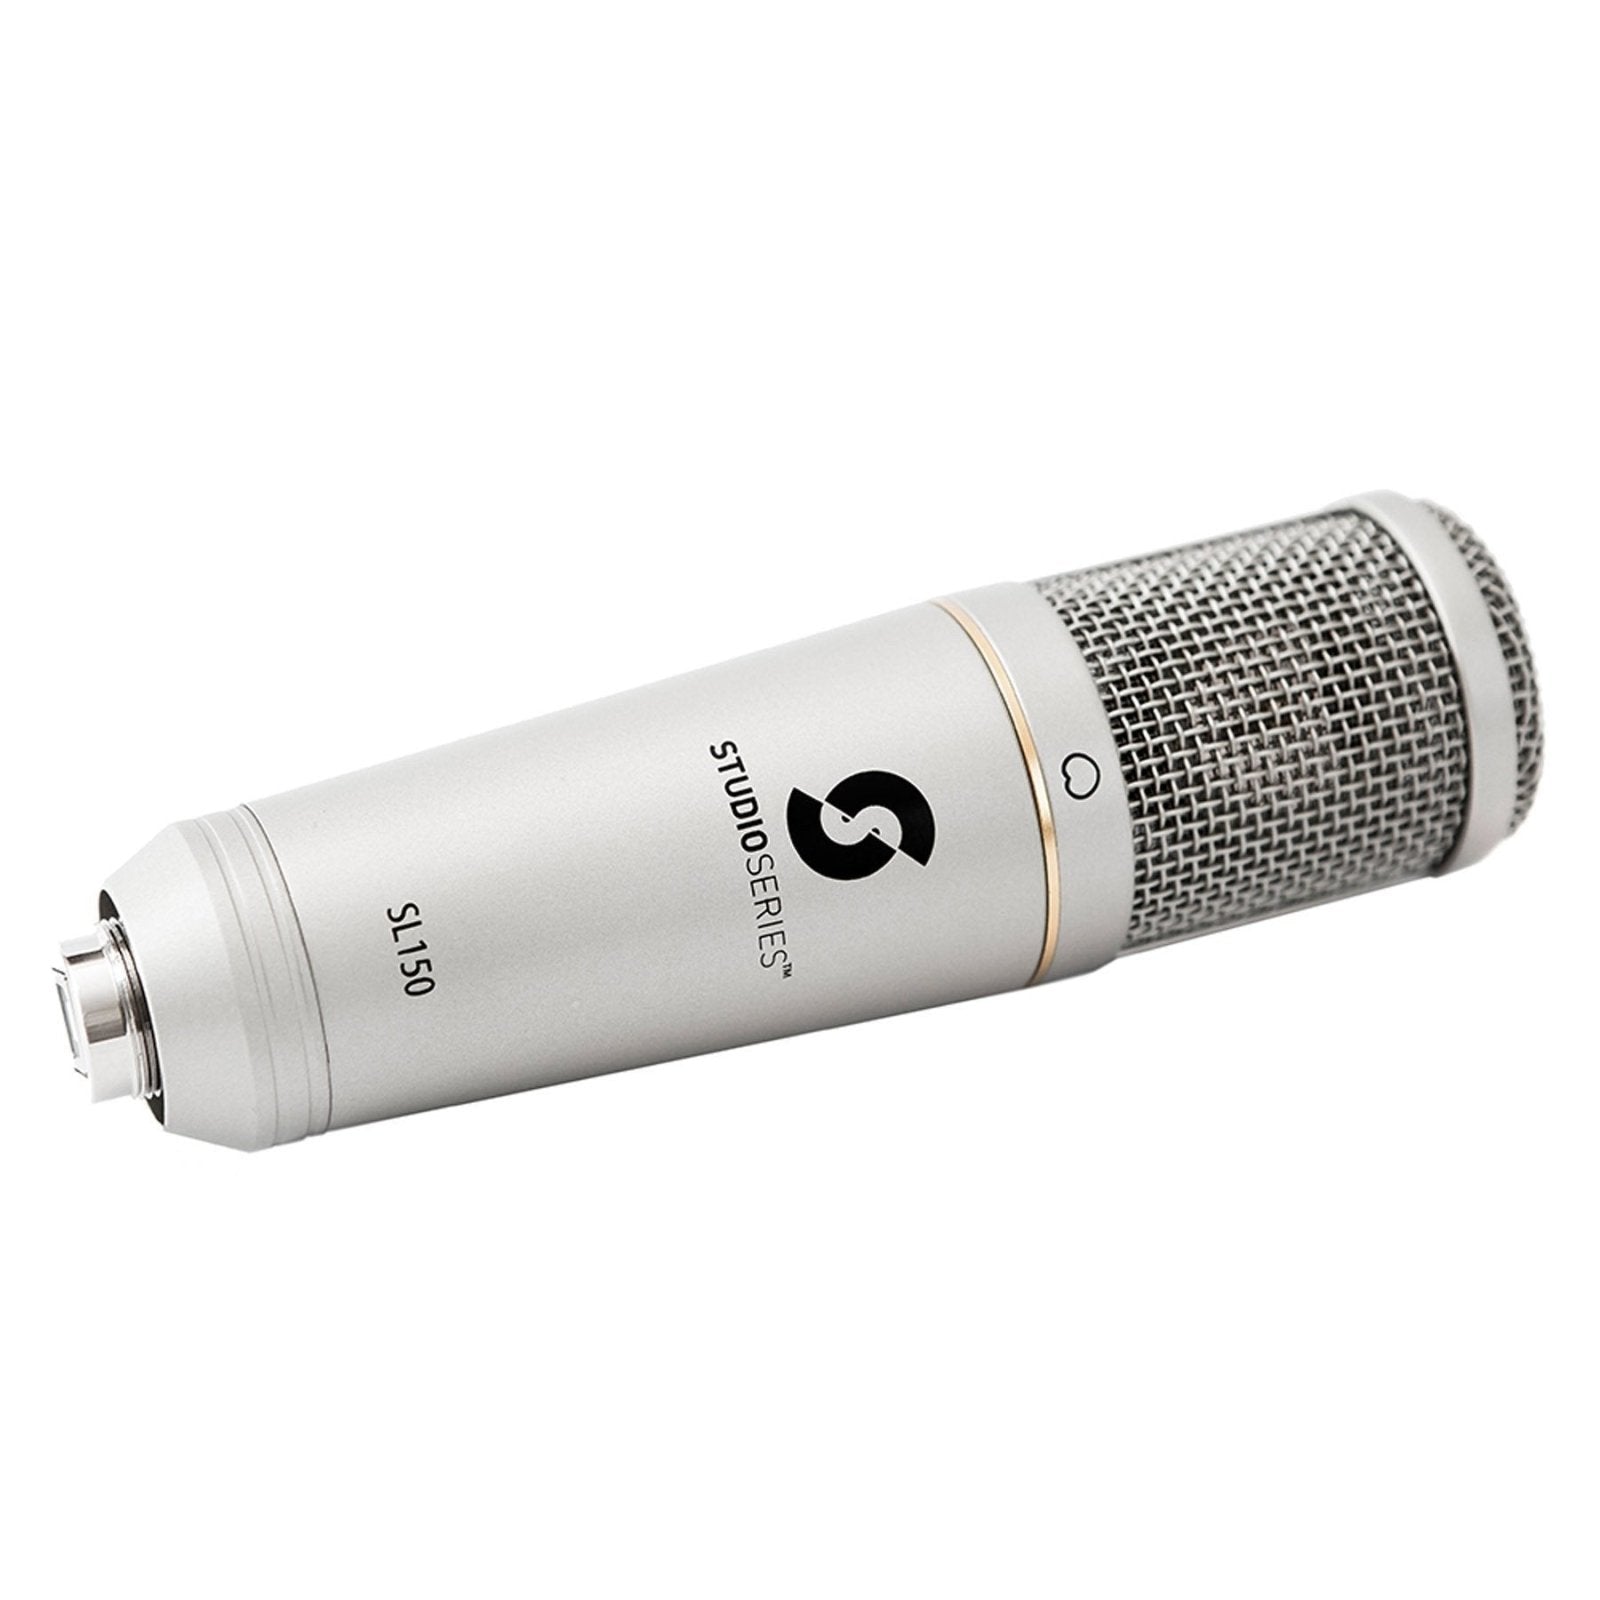 (Secret Ex-Photoshoot) SL150 Condenser USB Microphone - Editors Keys